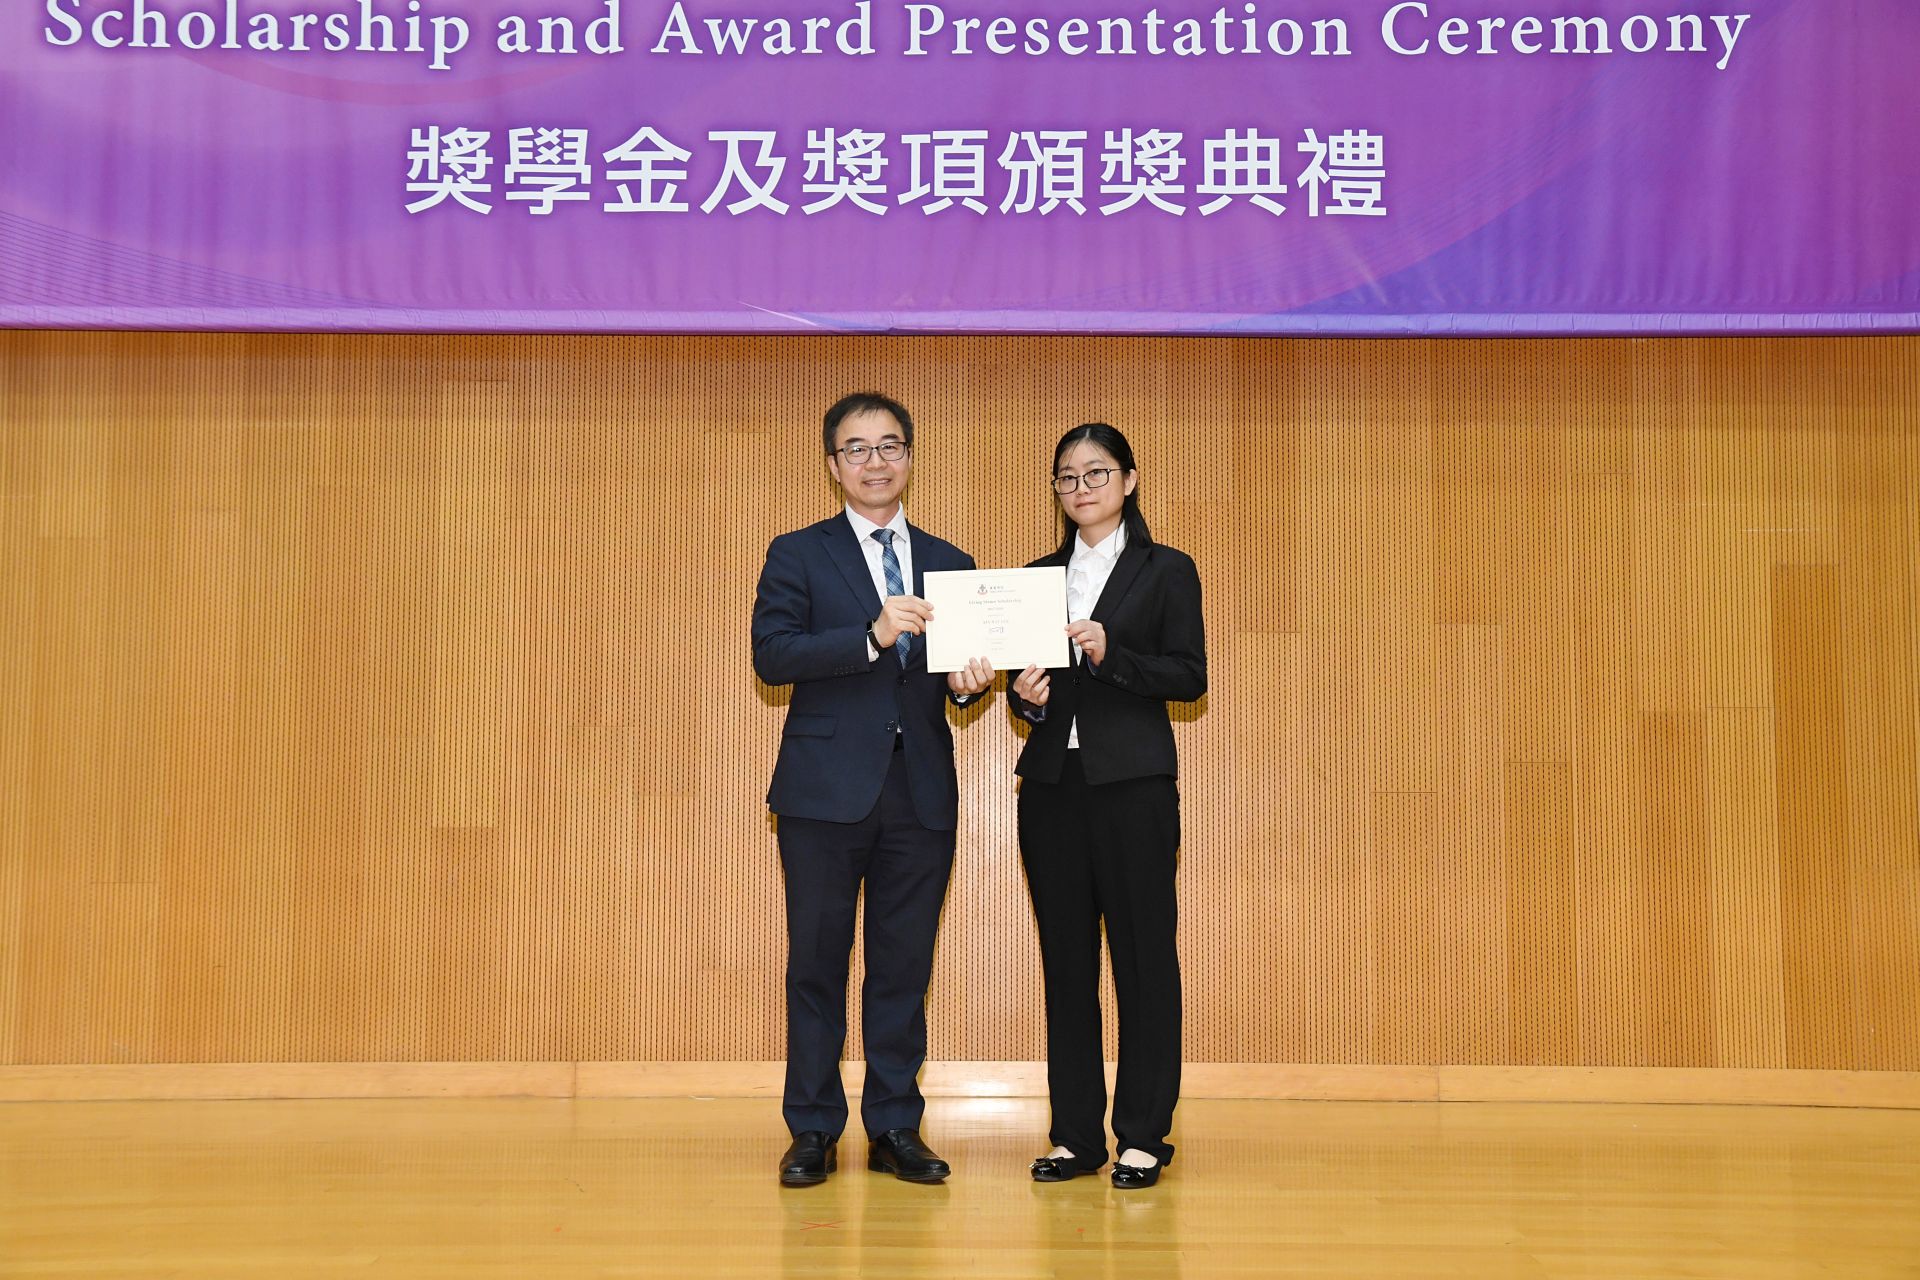 Scholarship and Award Presentation Ceremony 2018